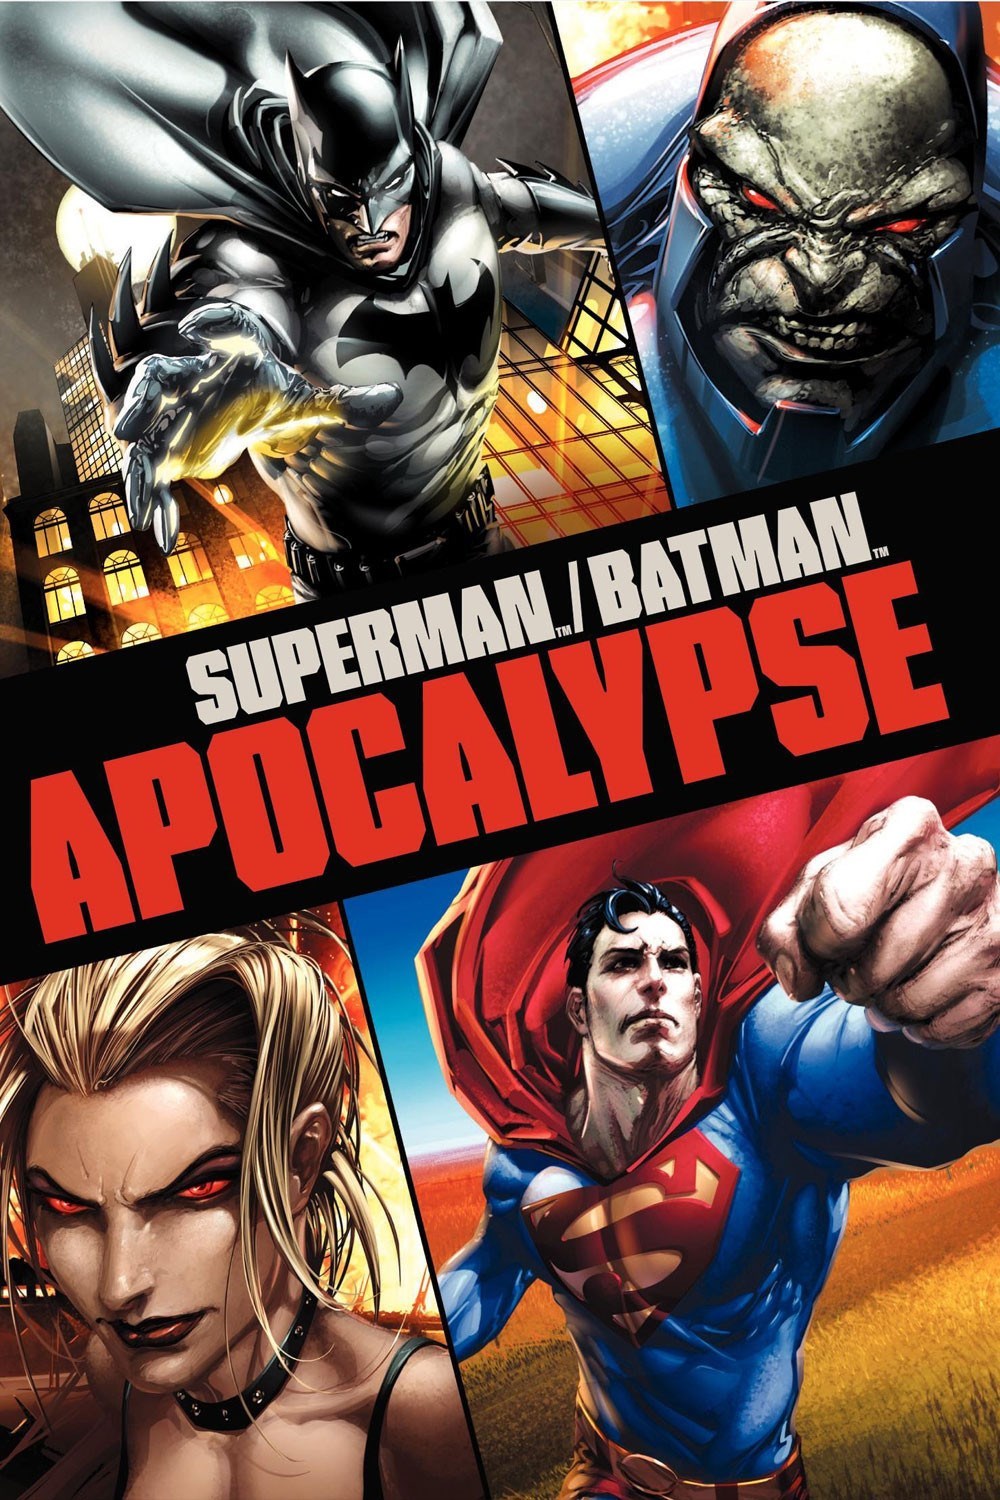 FULL MOVIE: Superman/Batman: Apocalypse (2010)